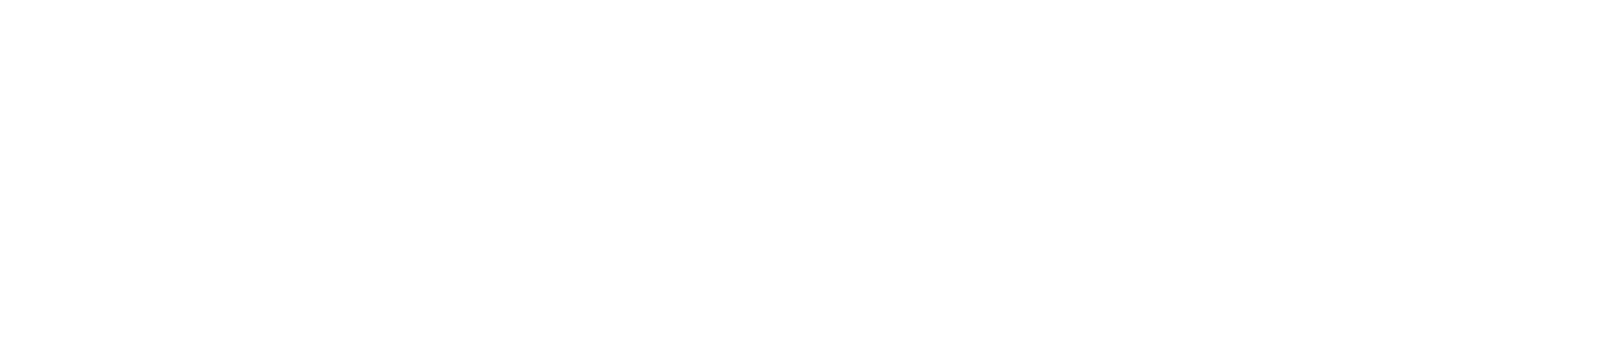 Vanda Pharmaceuticals logo grand pour les fonds sombres (PNG transparent)